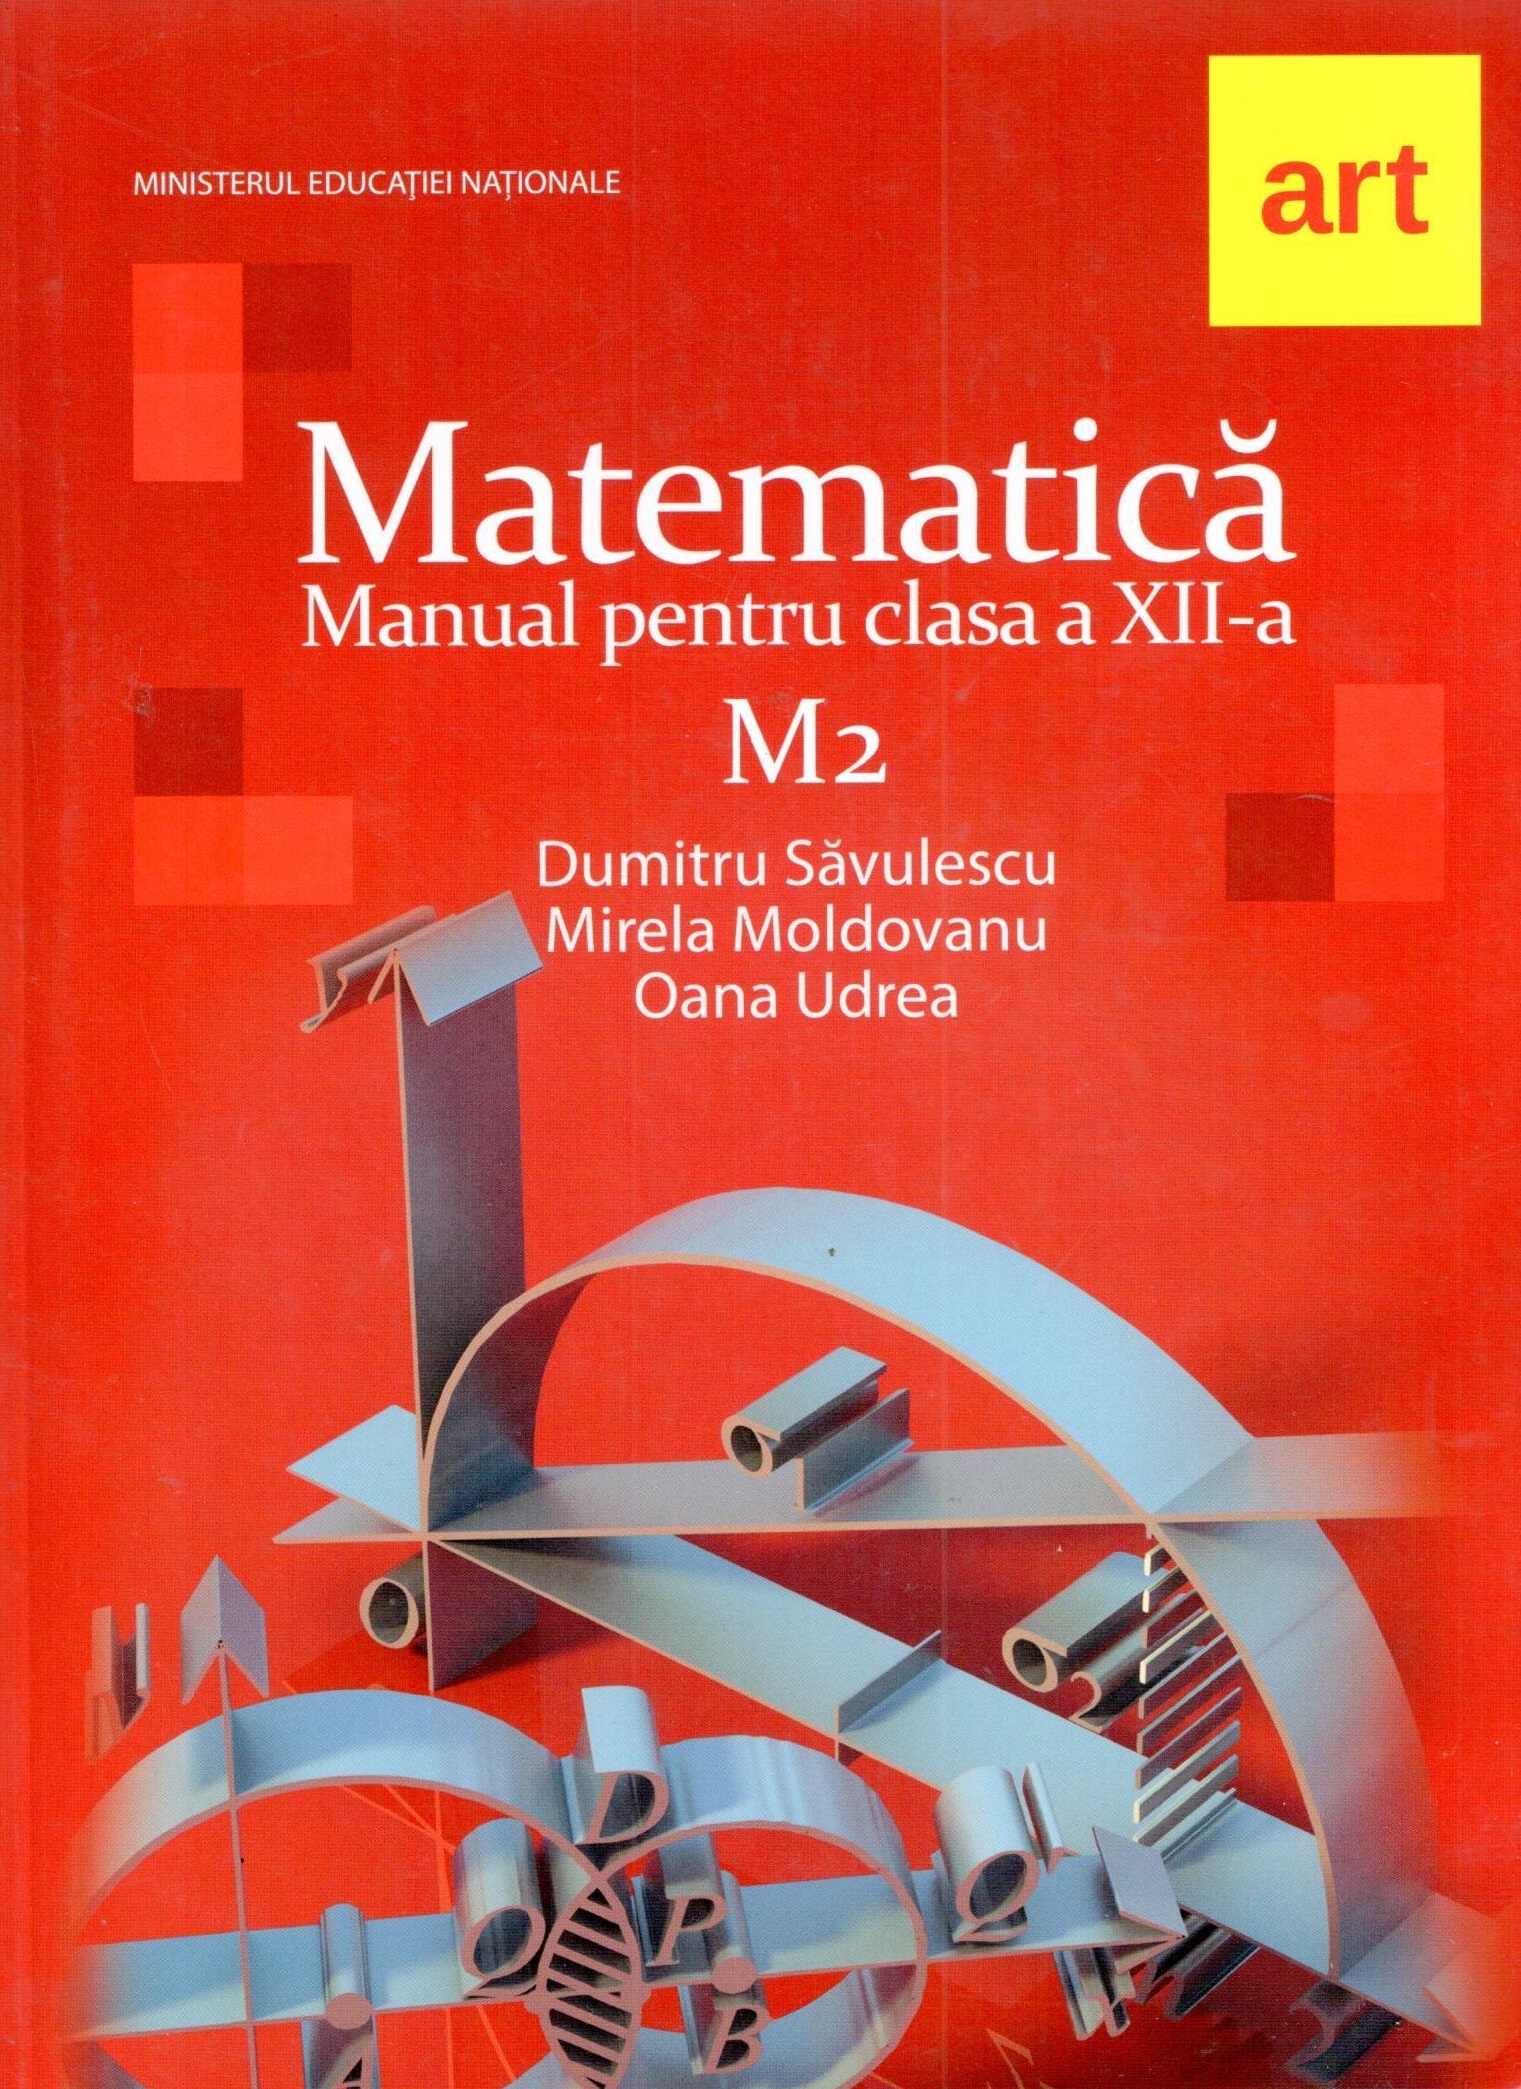 PDF Manual matematica M2 pentru clasa a XII-a | Mirela Moldovan, Dumitru Savulescu ART educational Scolaresti